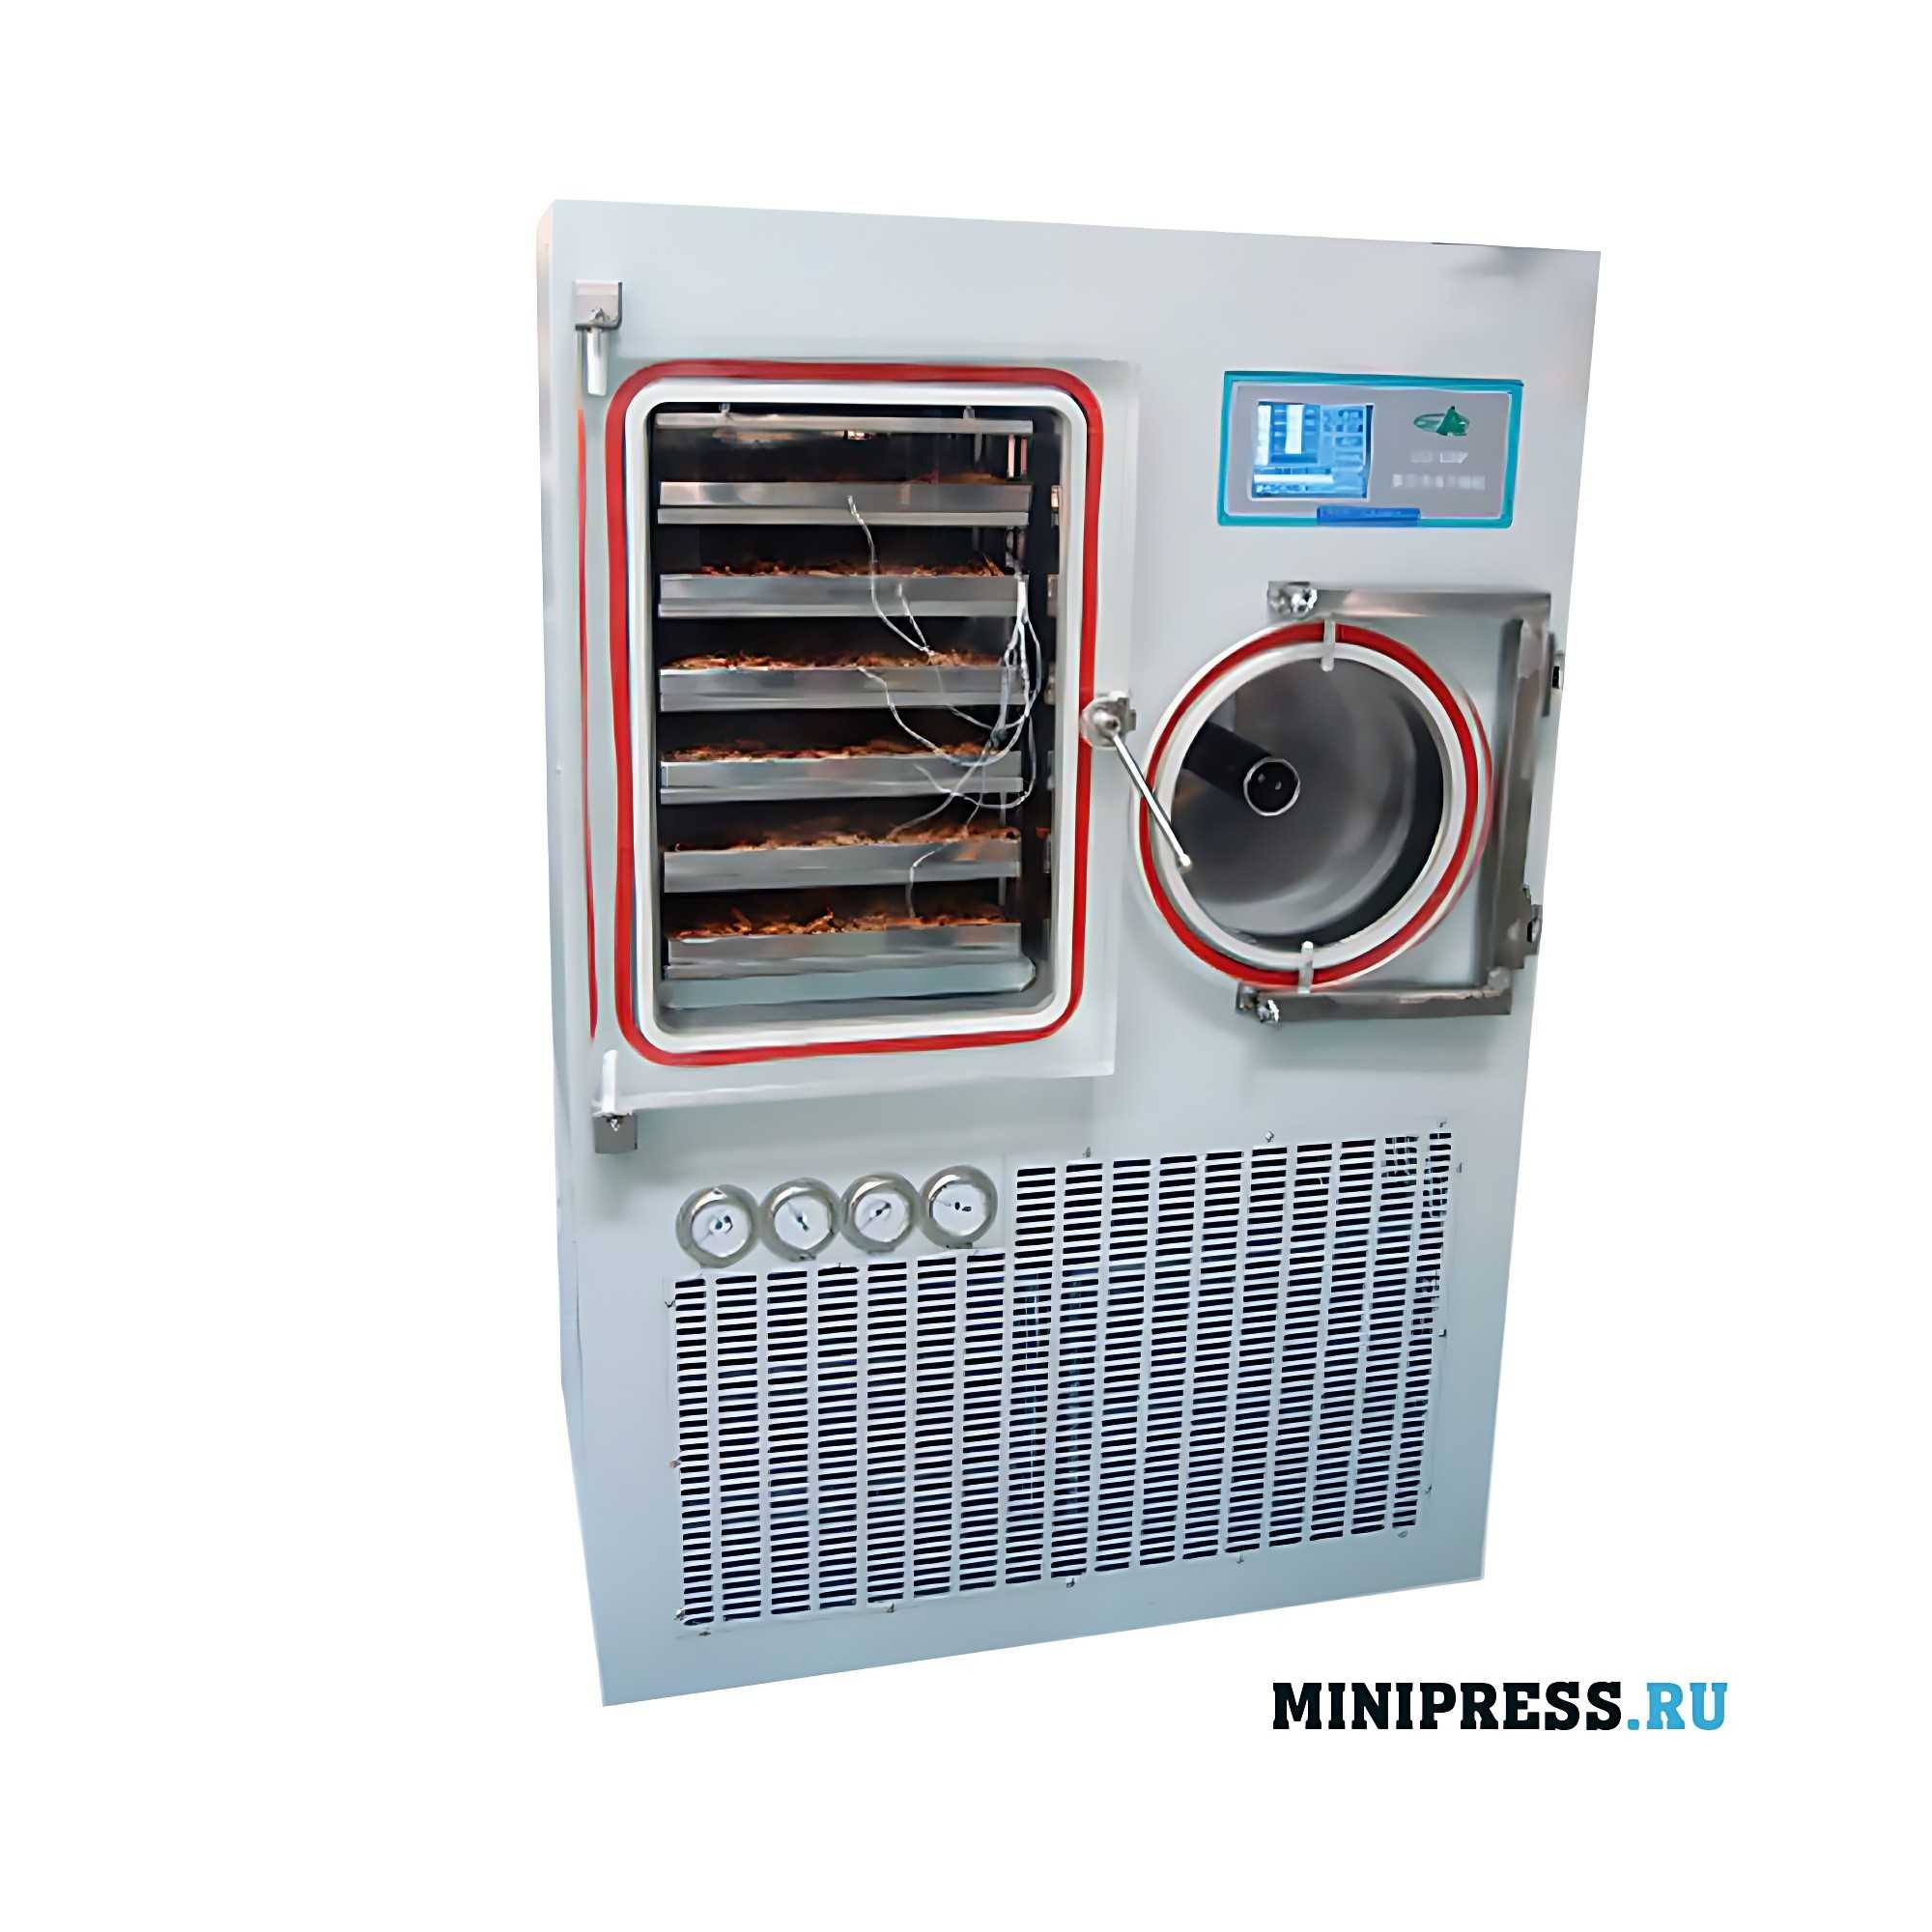 Vacuum lyophilic freeze dryer LG-30